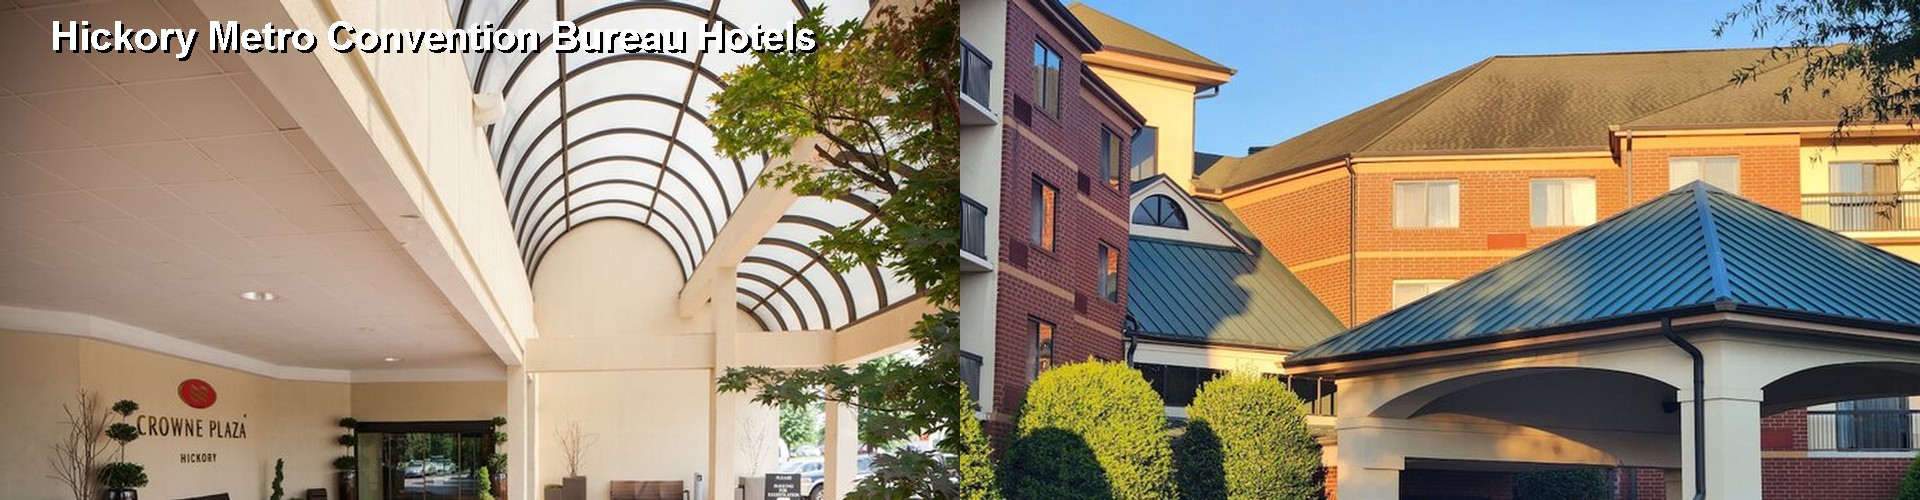 5 Best Hotels near Hickory Metro Convention Bureau